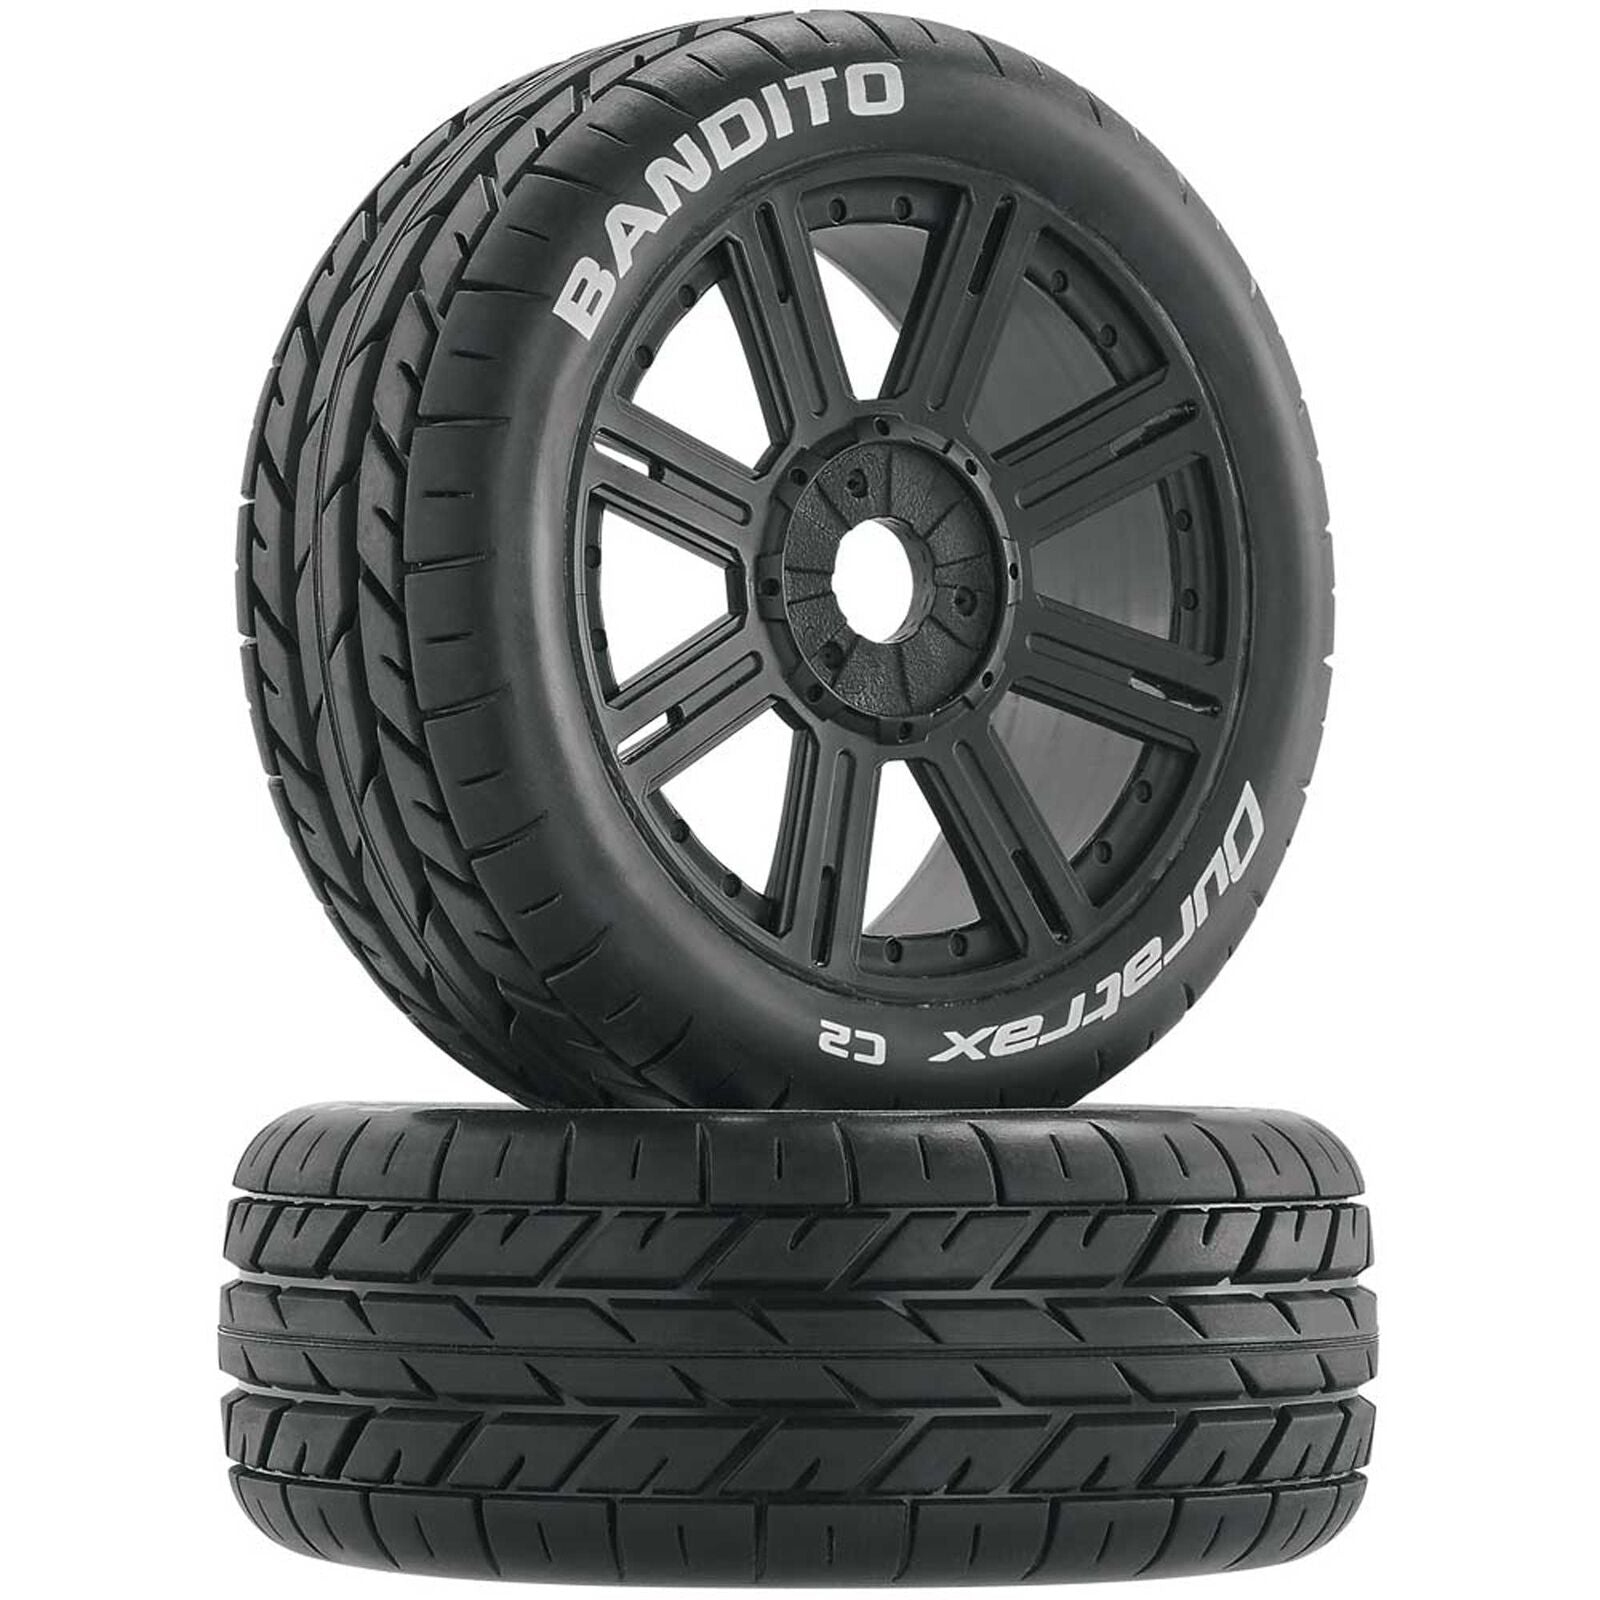 DURATRAX DTXC3655 Bandito 1/8 Buggy Tire C2 Mounted Spoke Tires, Black (2)